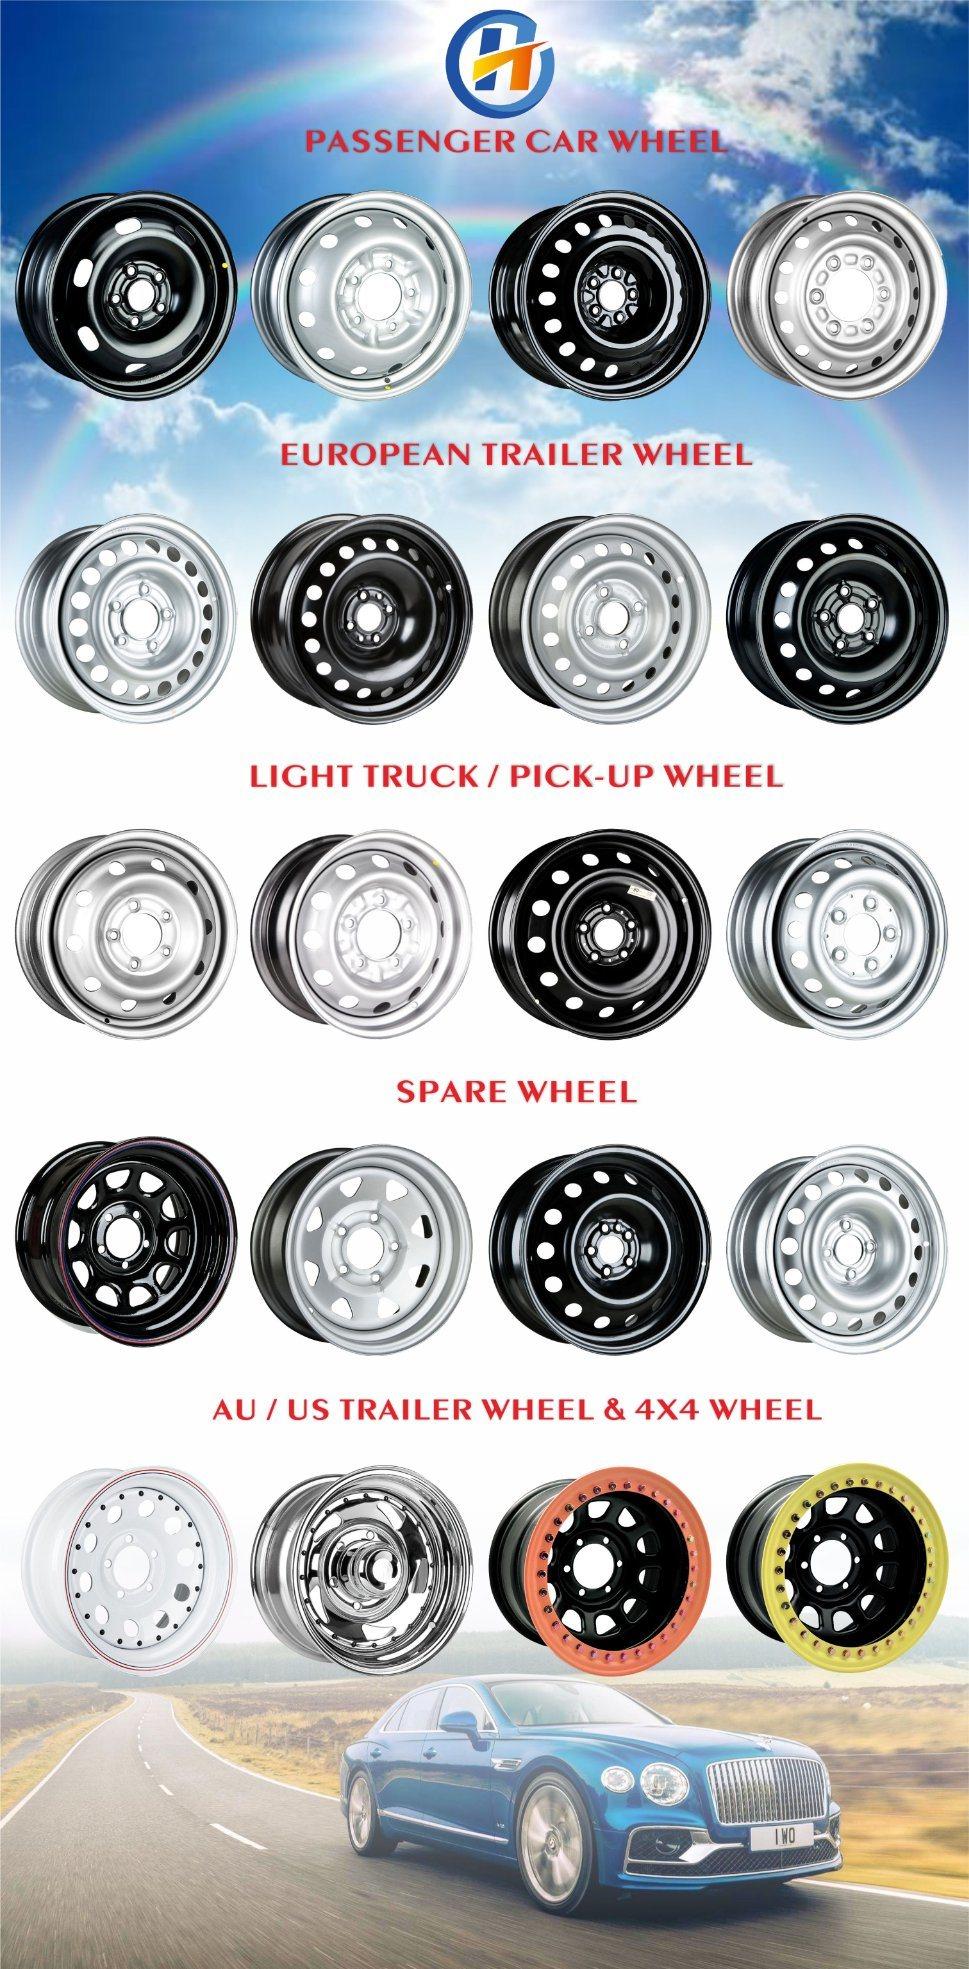 H&T Wheel 675706 Popular Design 16X6.5 PCD 5X114.3 16 Inch Passenger Car Steel Wheel Rim